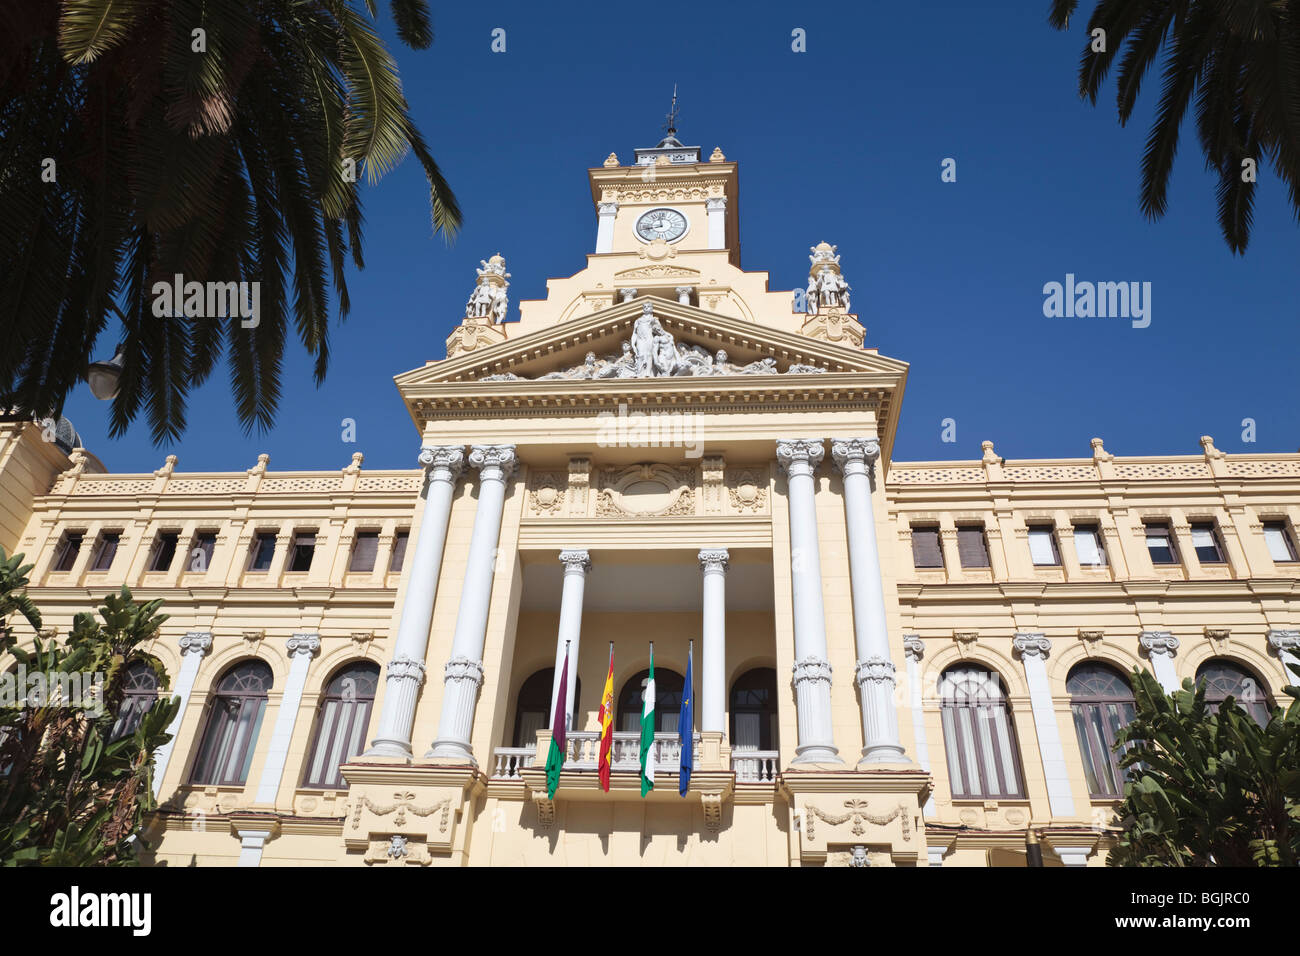 19th century baroque style Town Hall building. Malaga, Malaga Province, Costa del Sol, Spain. Stock Photo